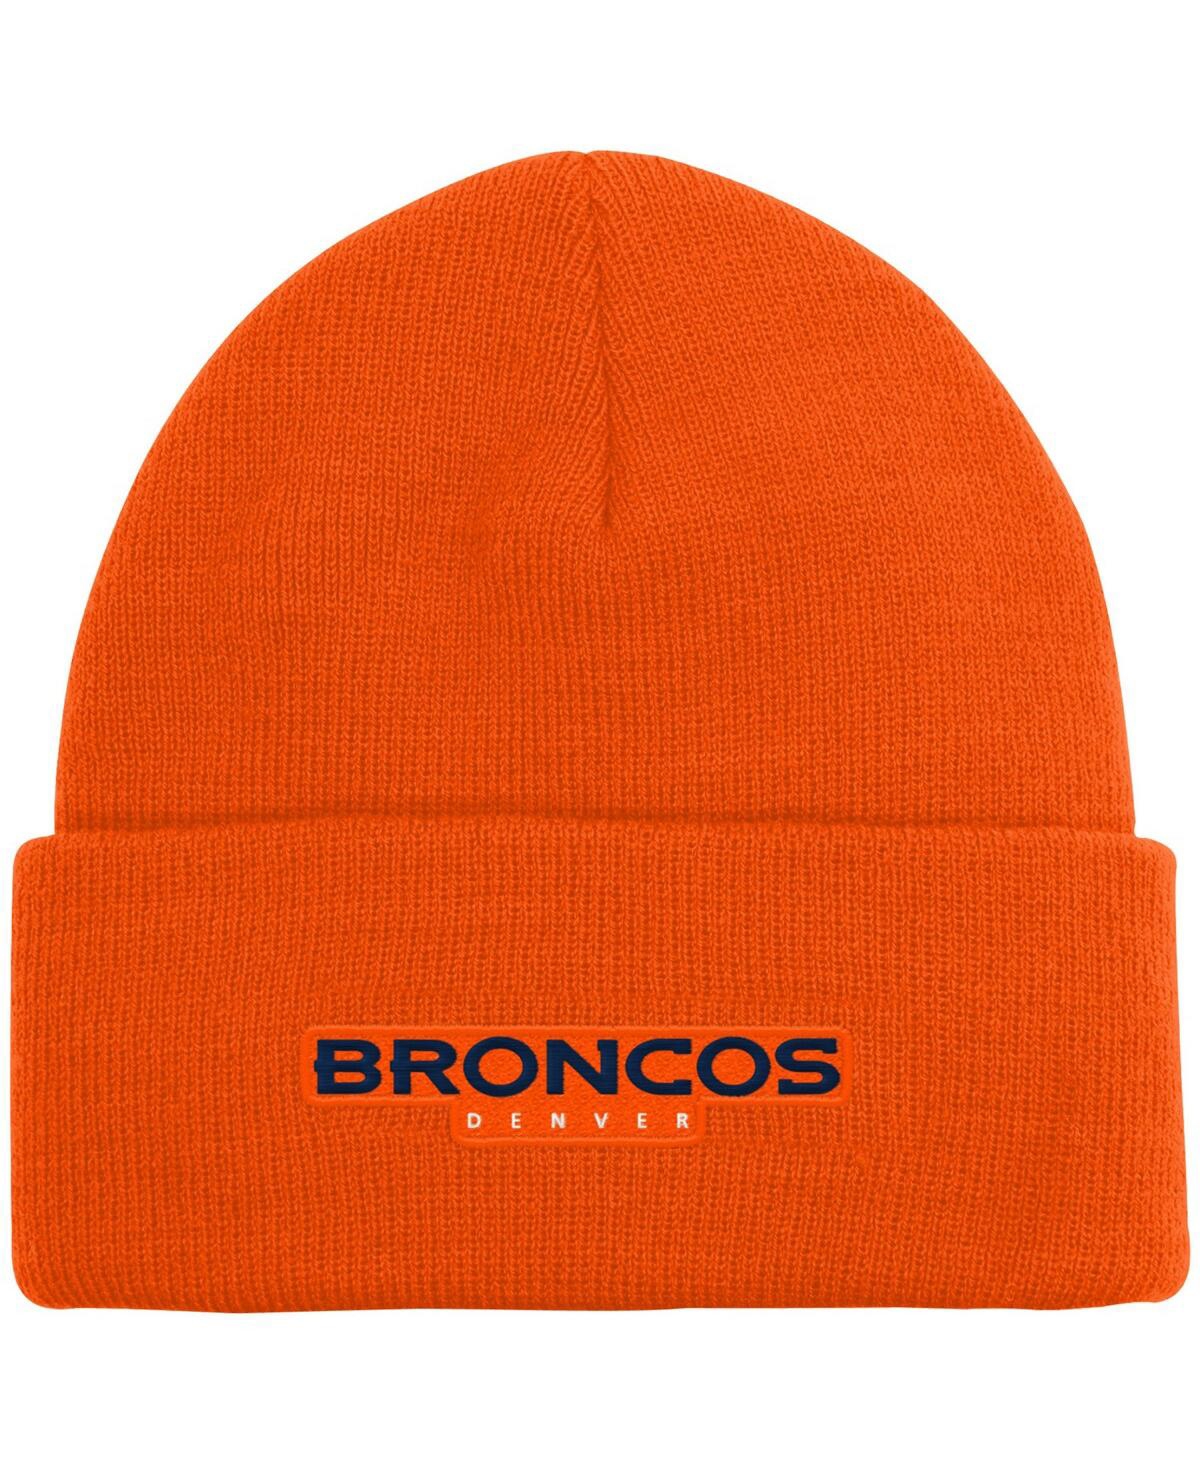 Shop Outerstuff Boys Orange Denver Broncos Basic Cuffed Knit Hat